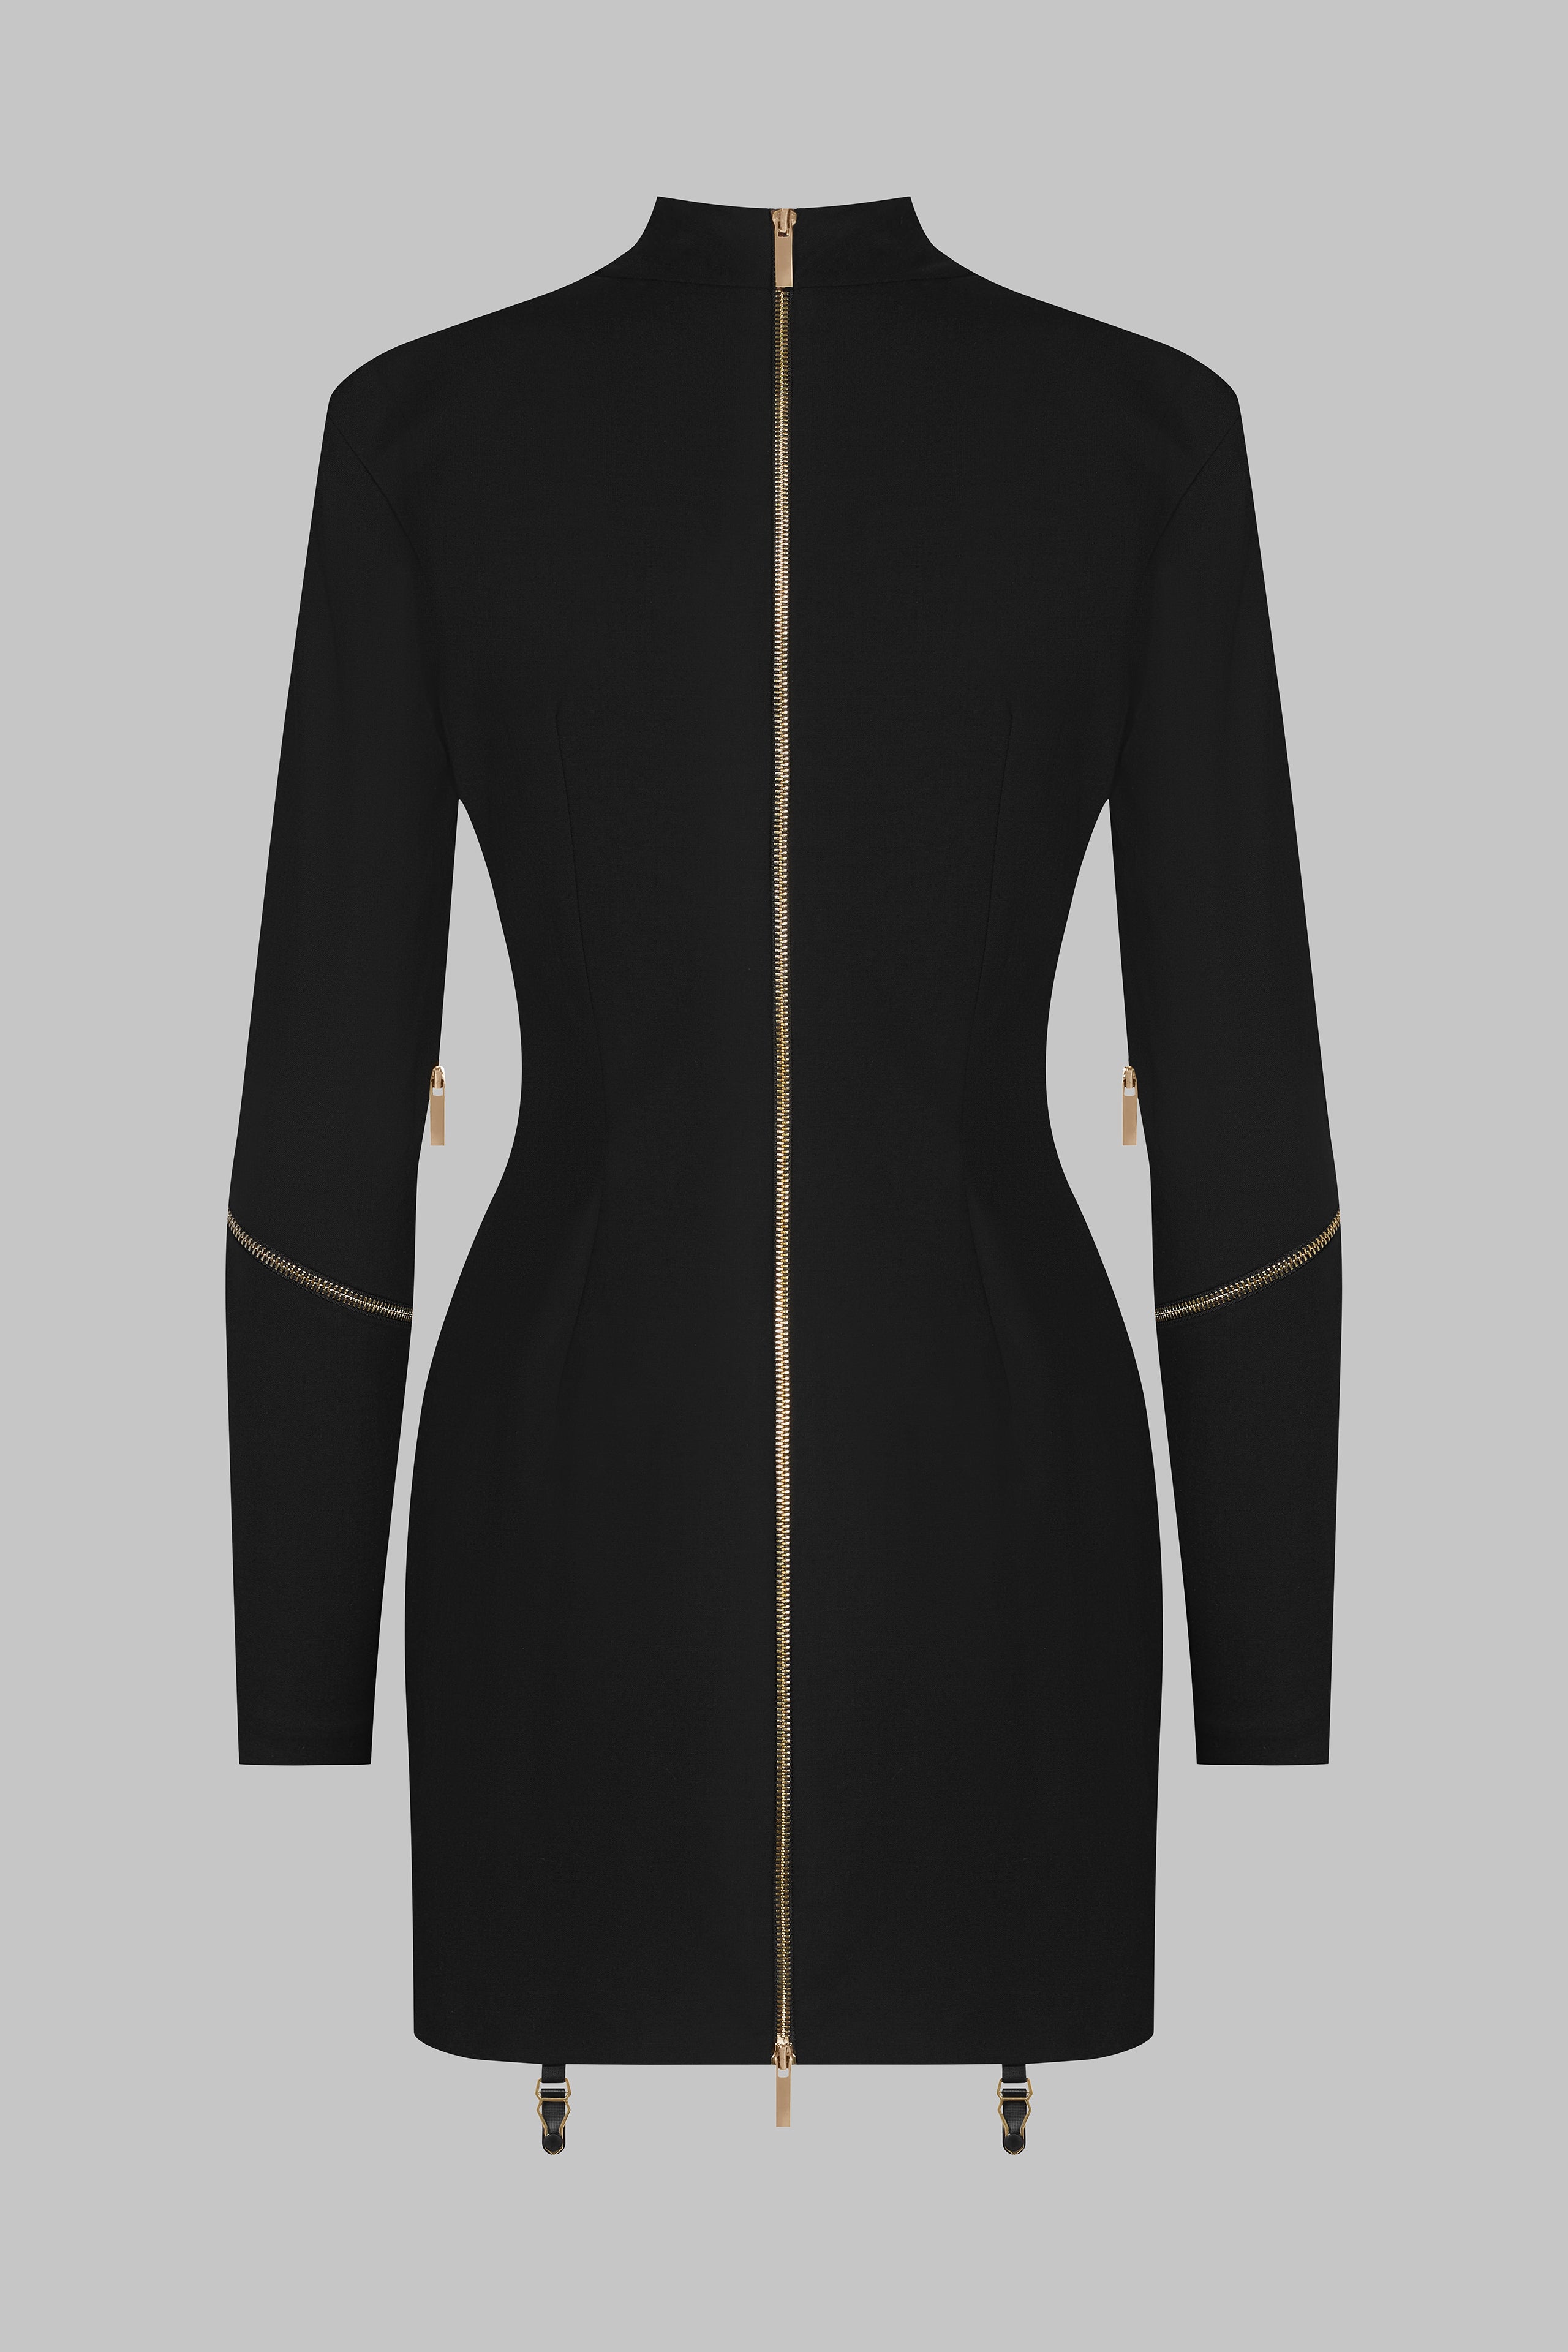 018 - Wool short dress with zip